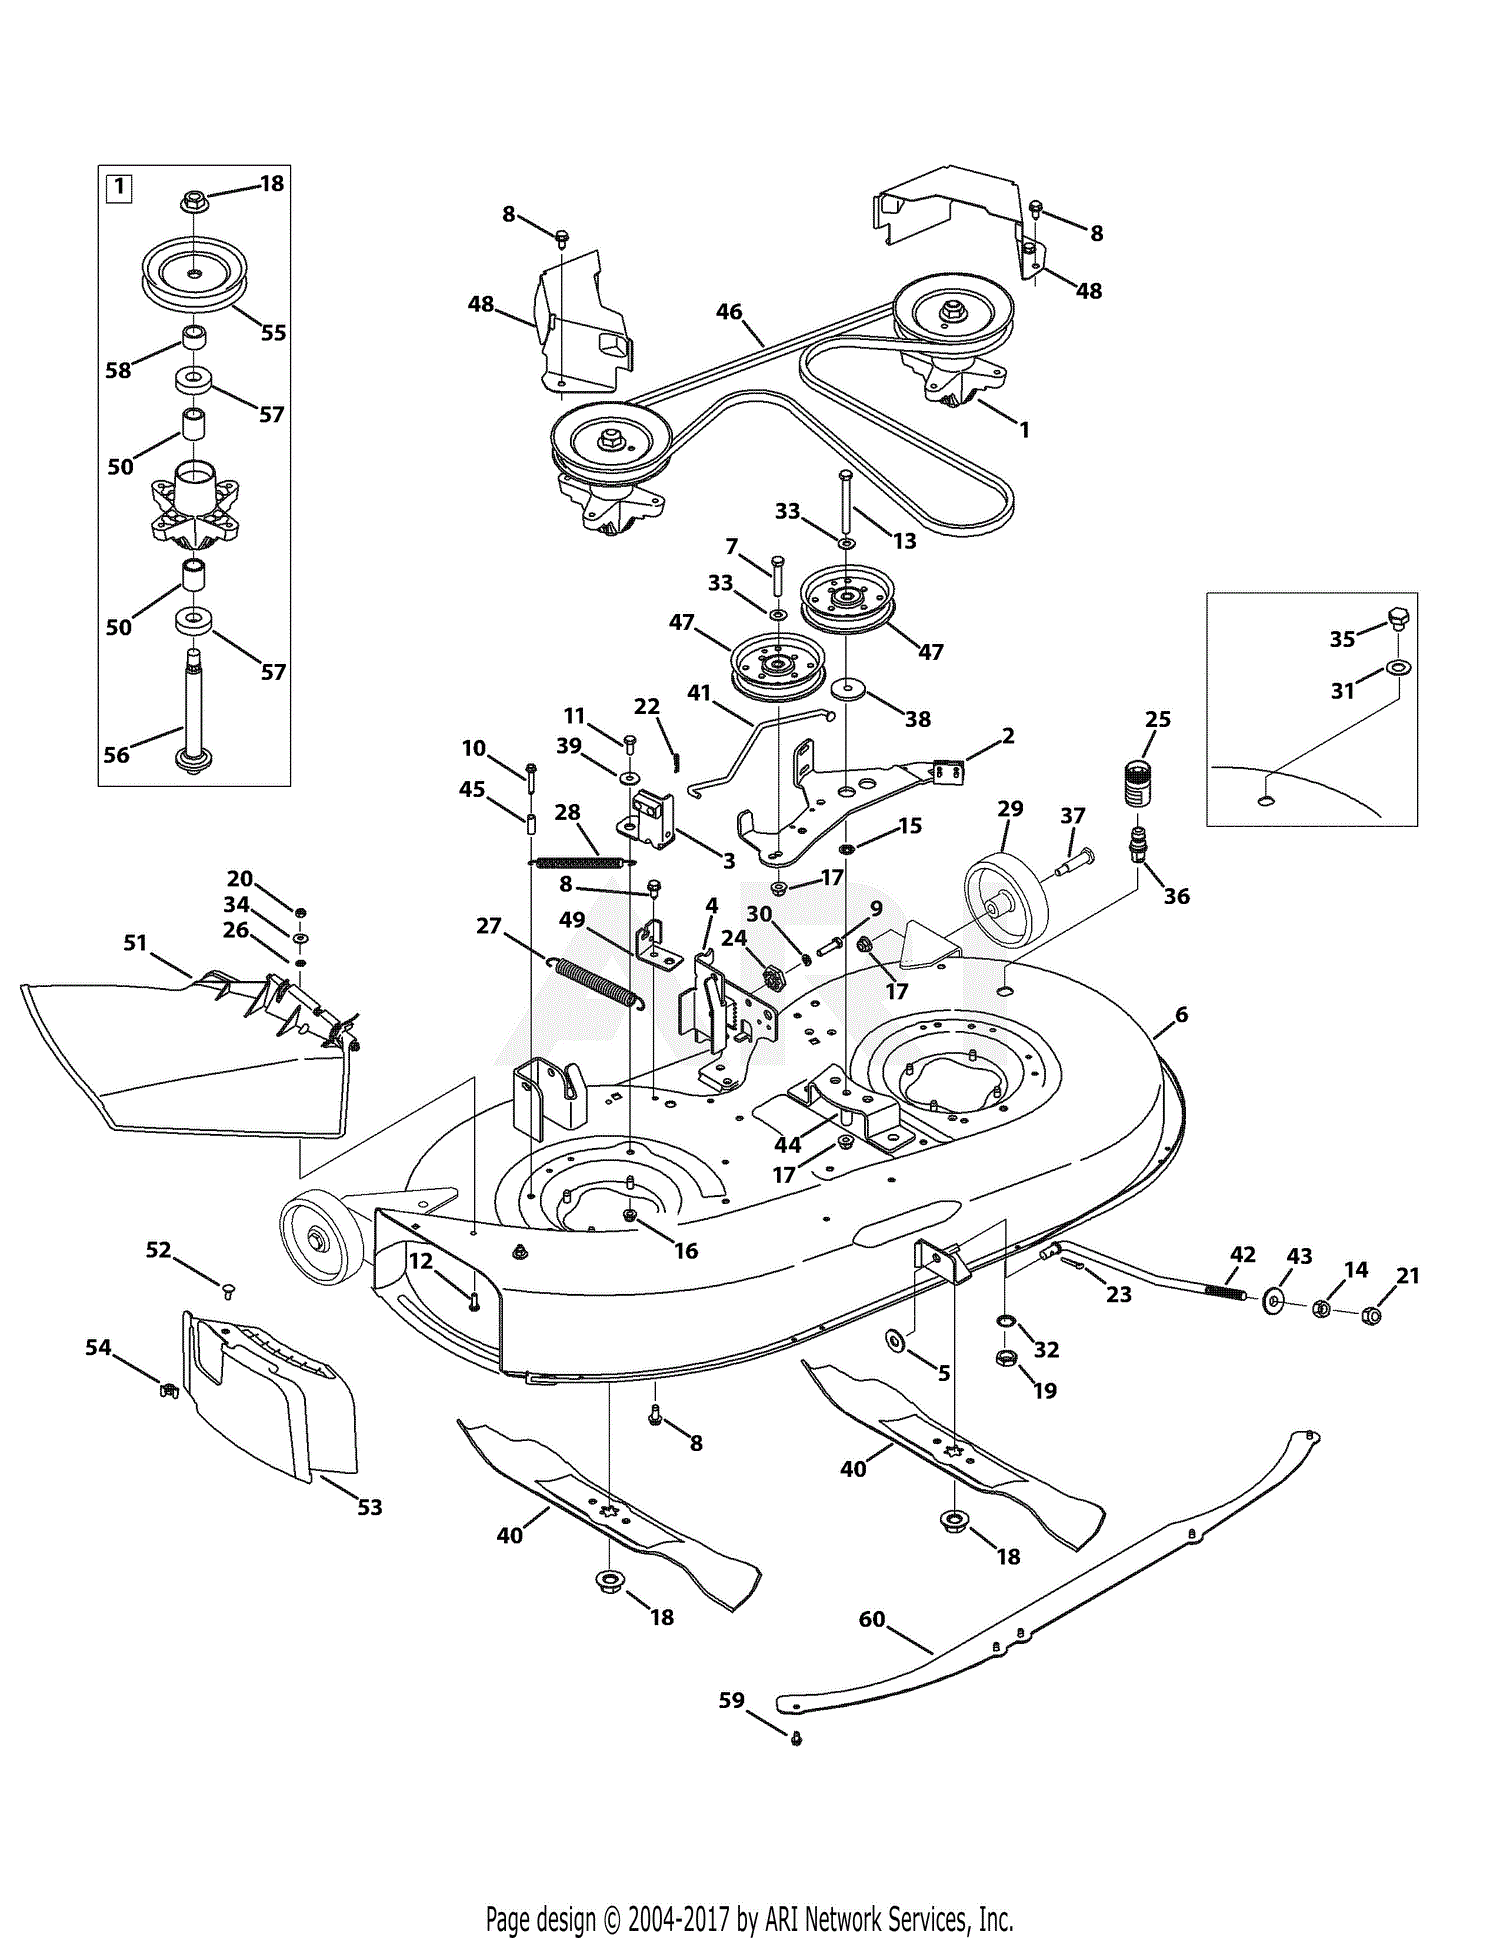 2009 troybilt pony wiring diagram